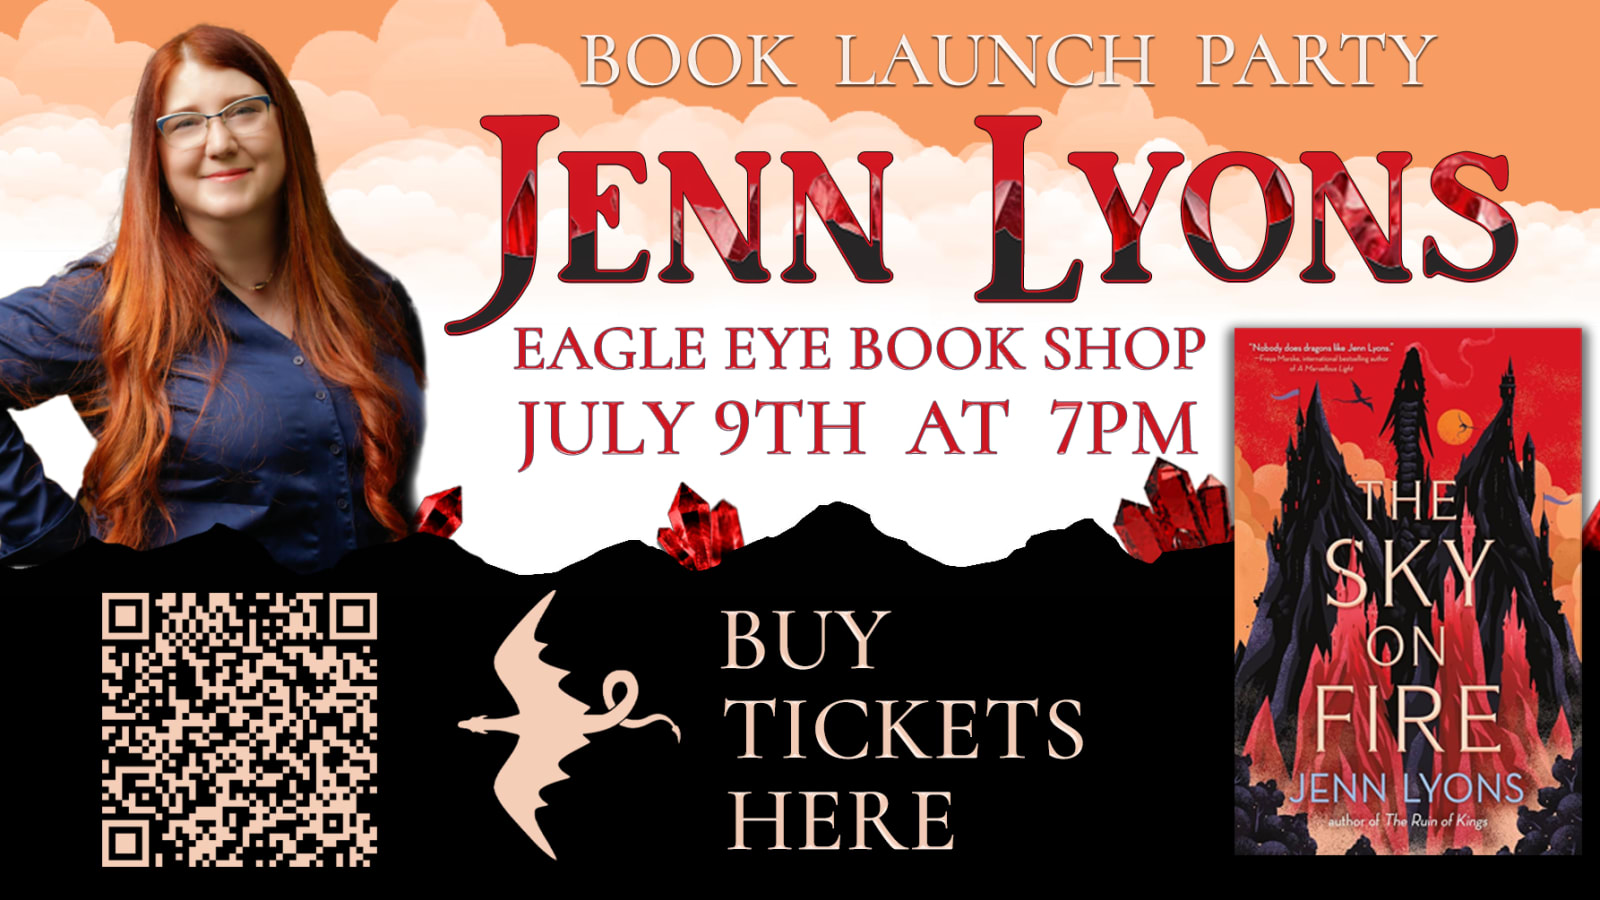 Jenn Lyons - The Sky on Fire Book Launch